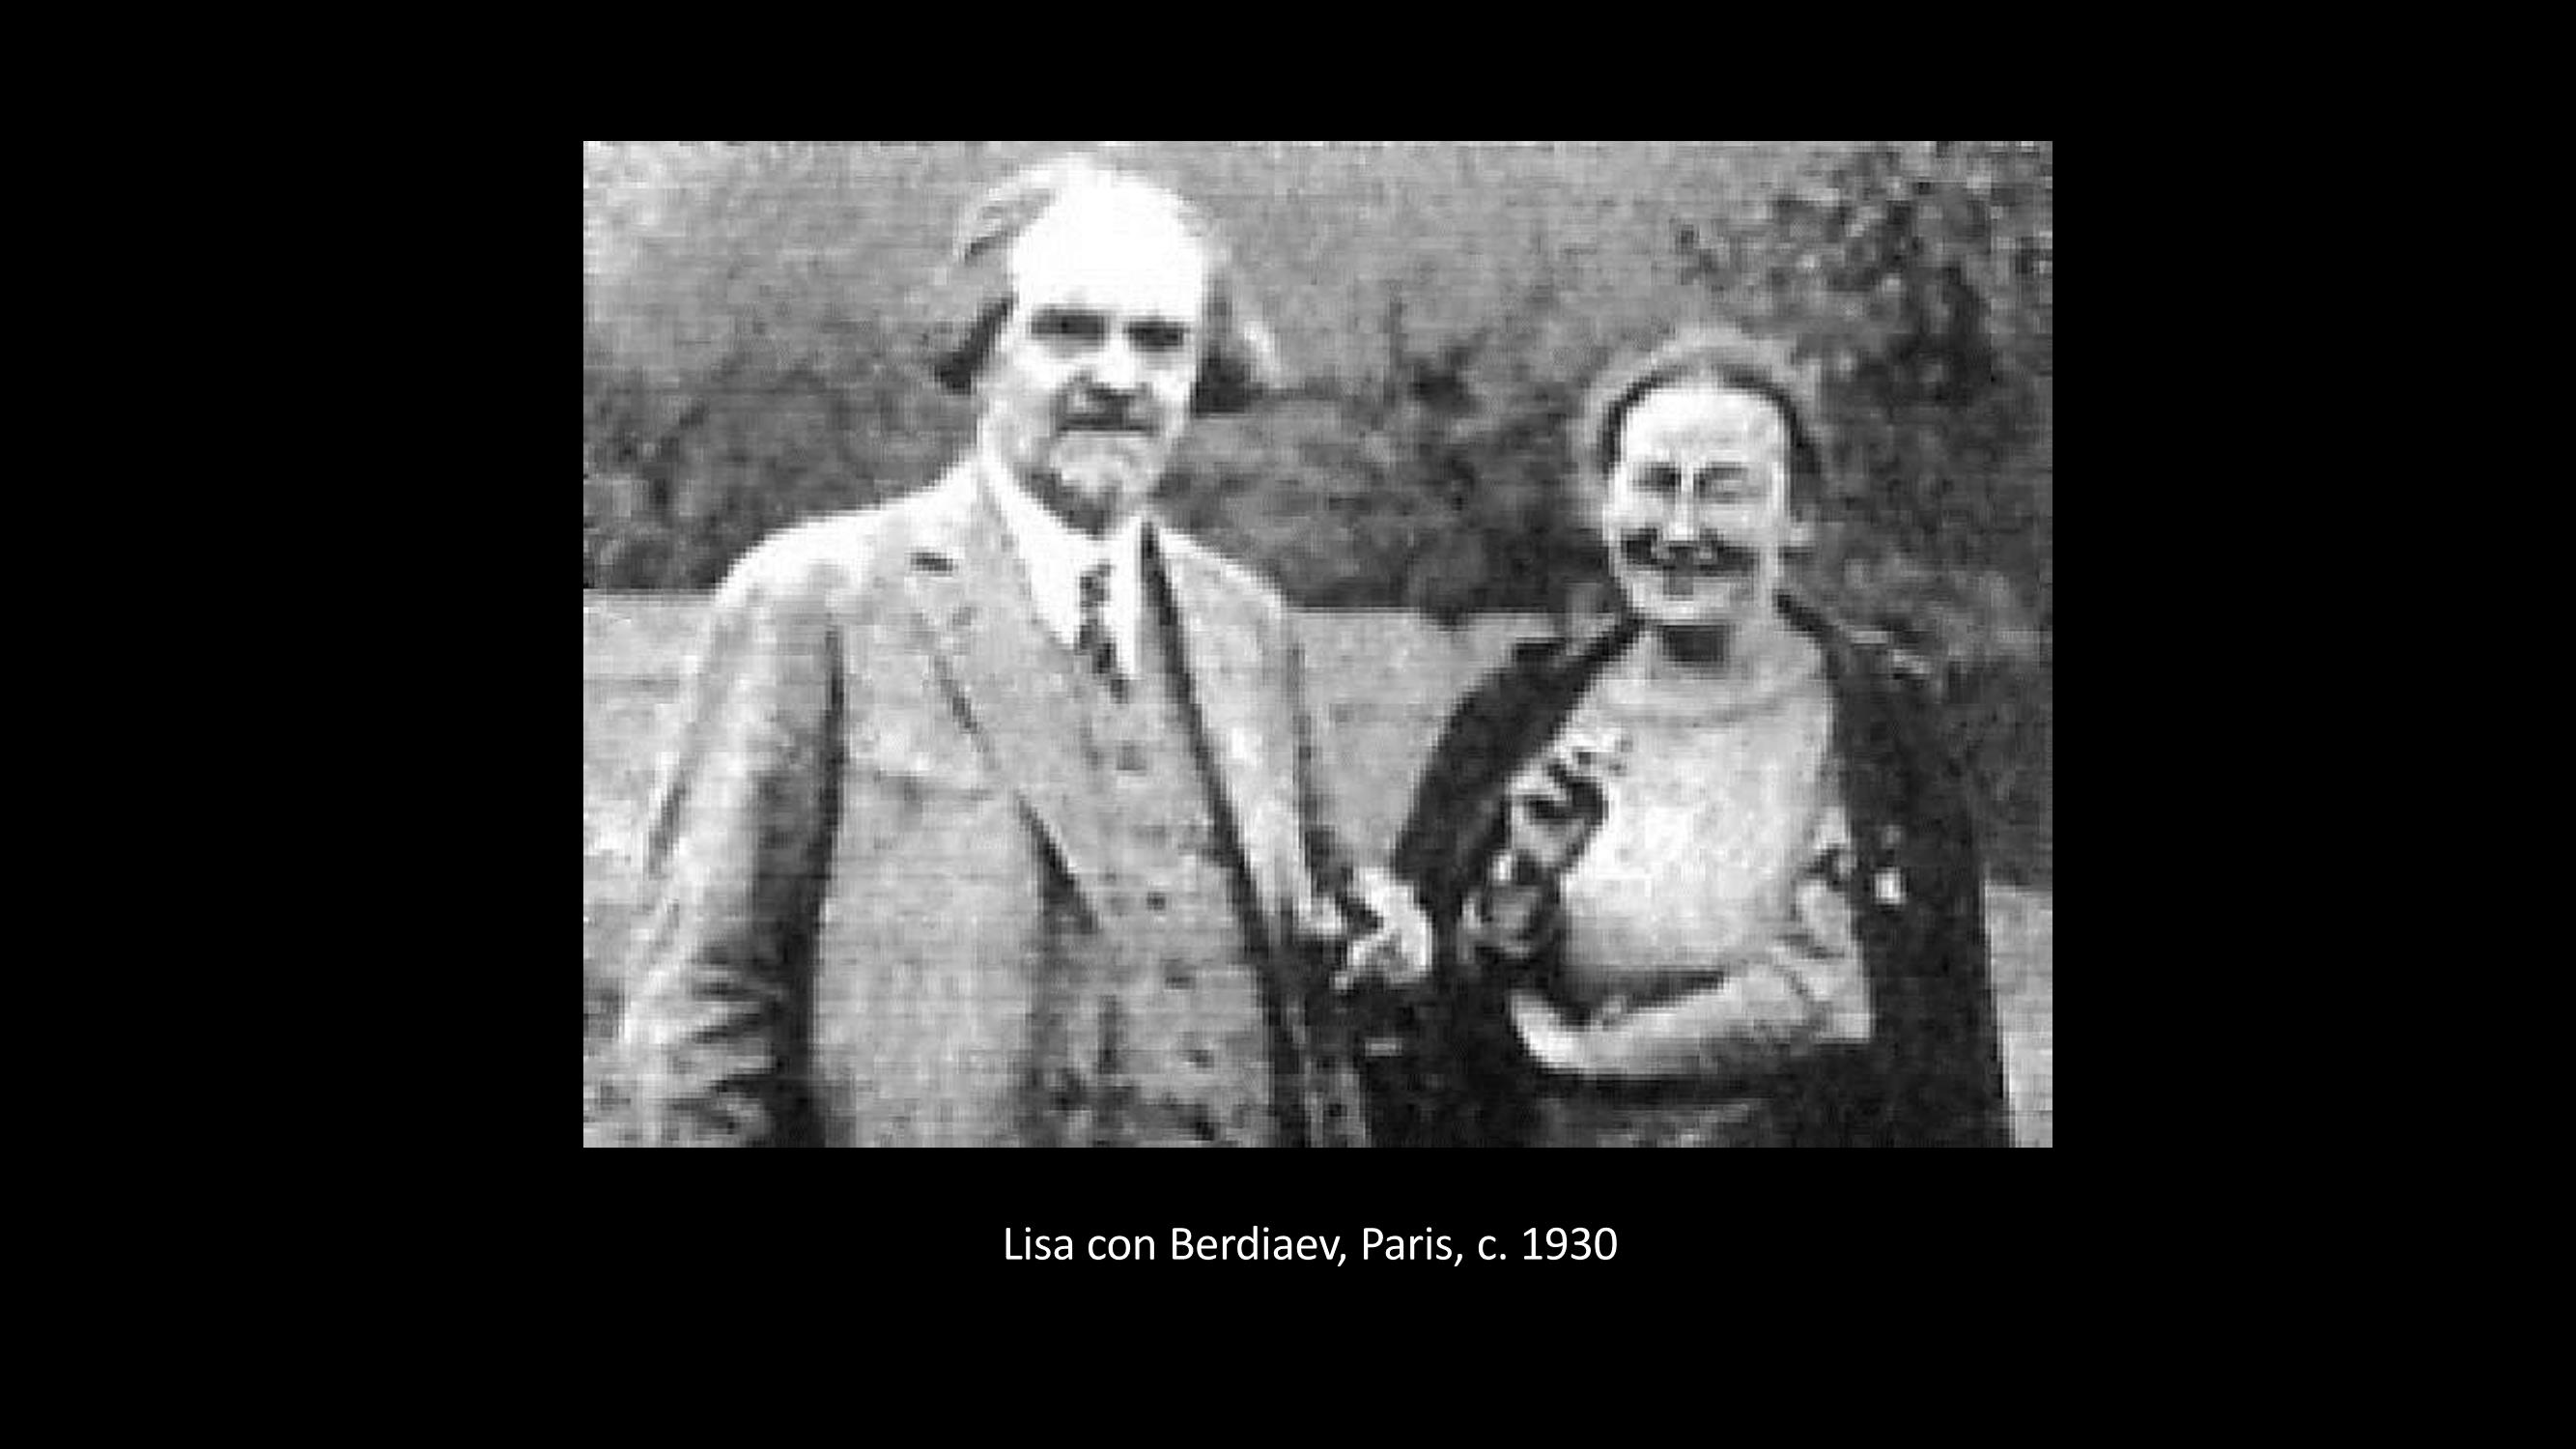 [39] Lisa com Berdiaev, Paris, 1930